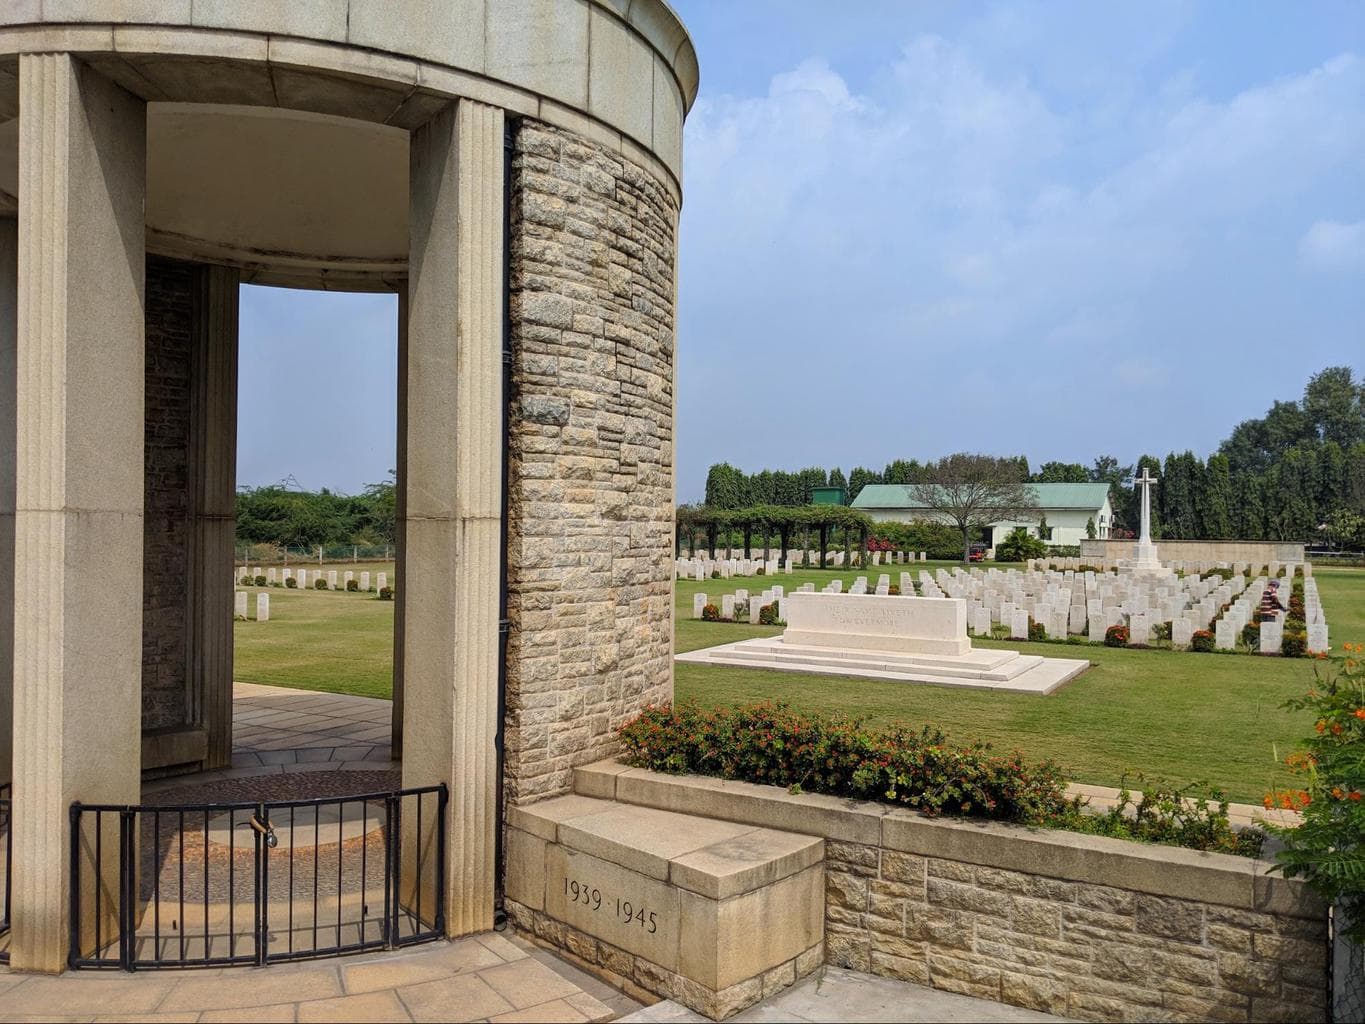 Madras War Cemetery memorial